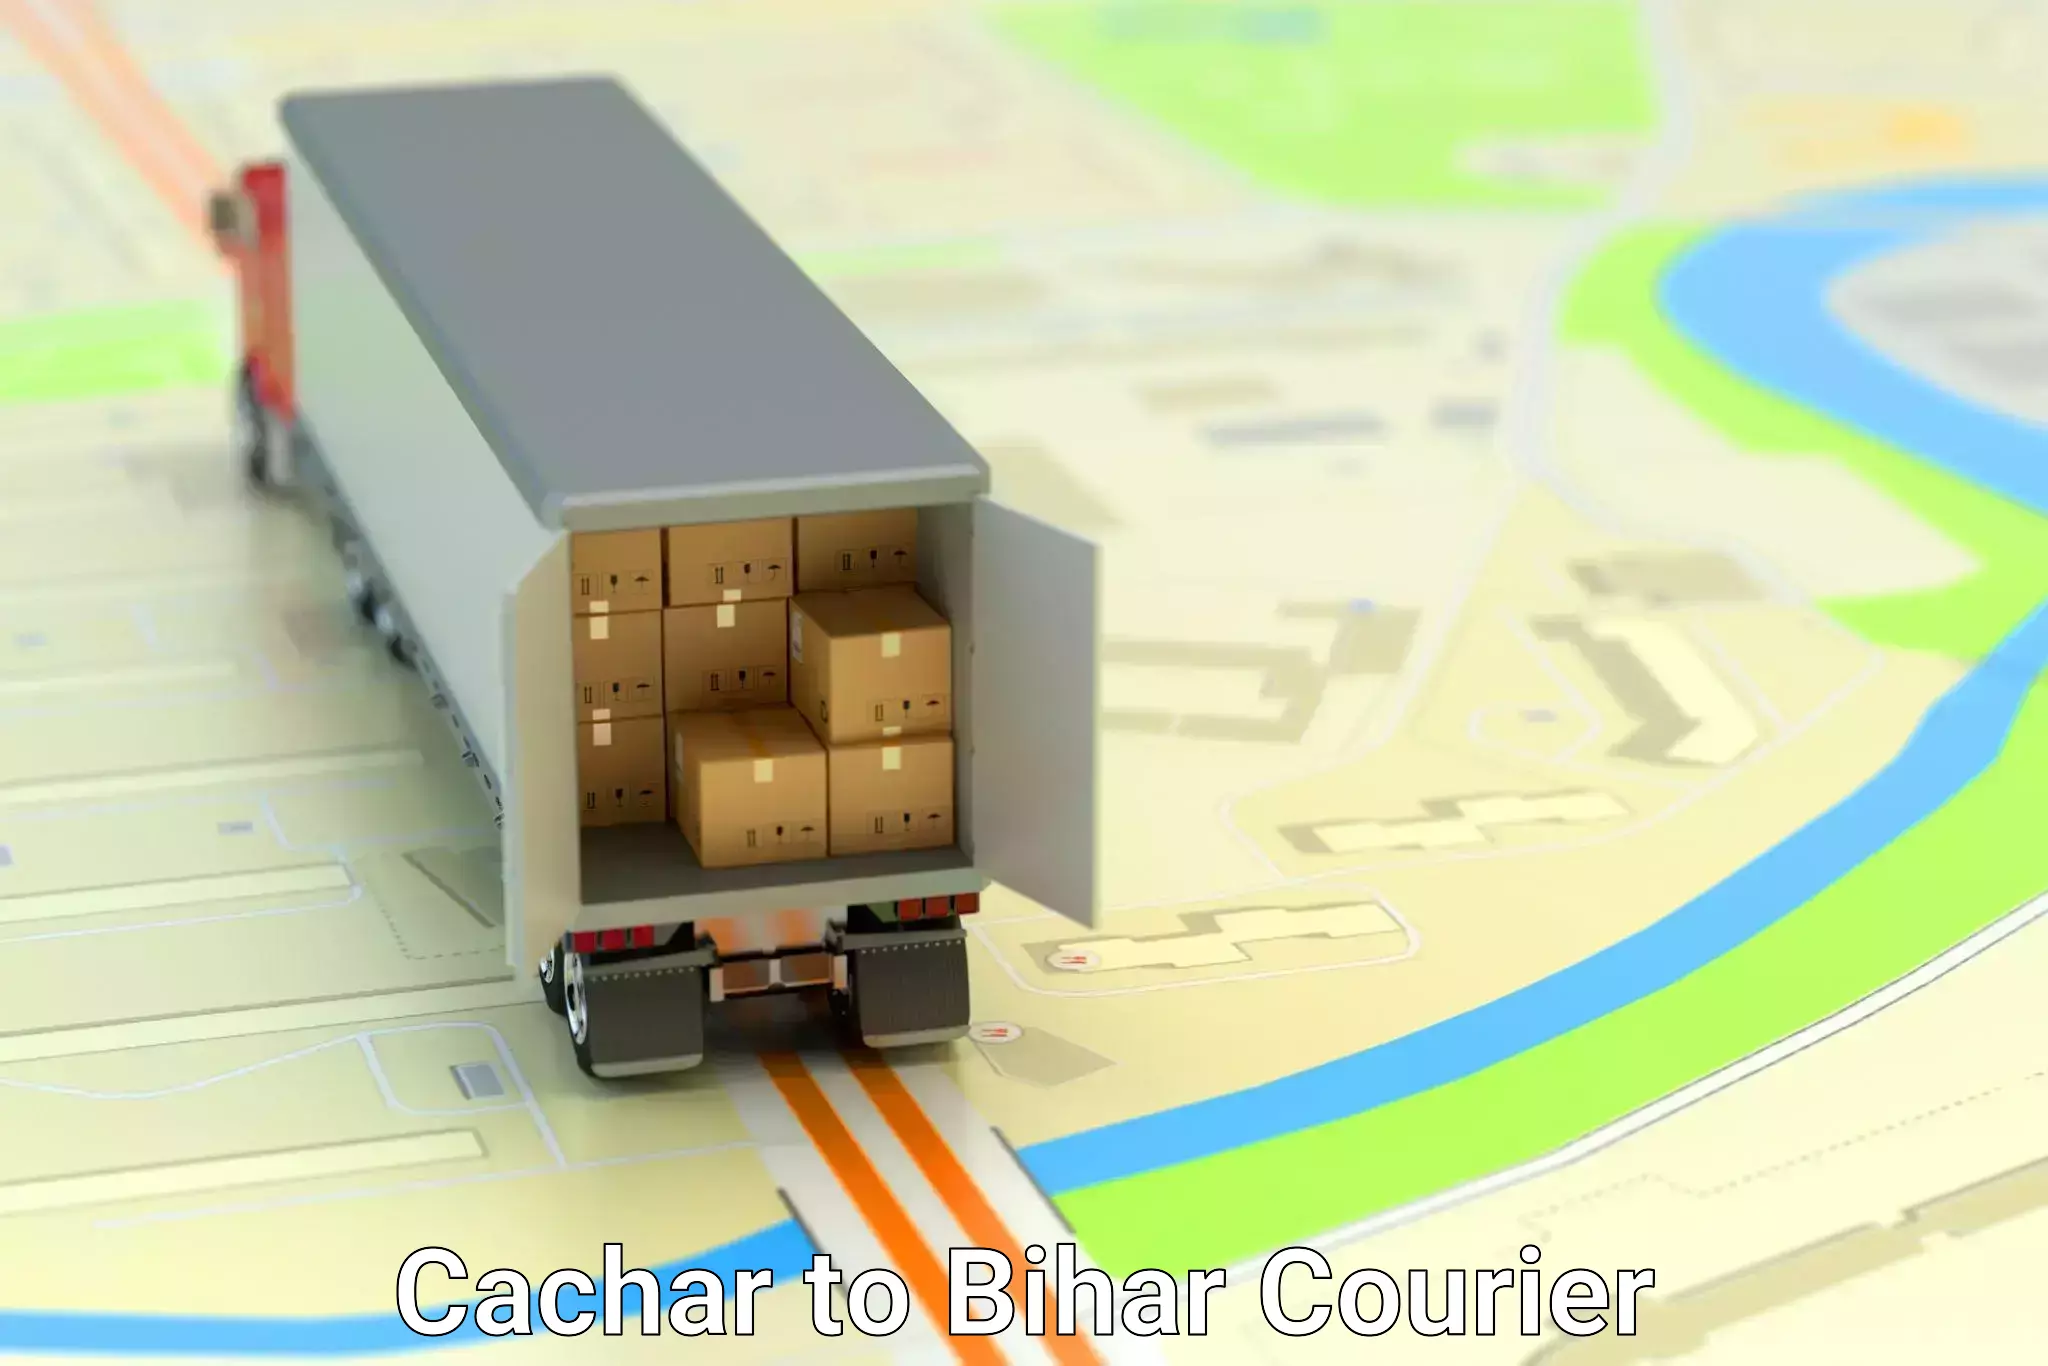 User-friendly courier app Cachar to Bihta